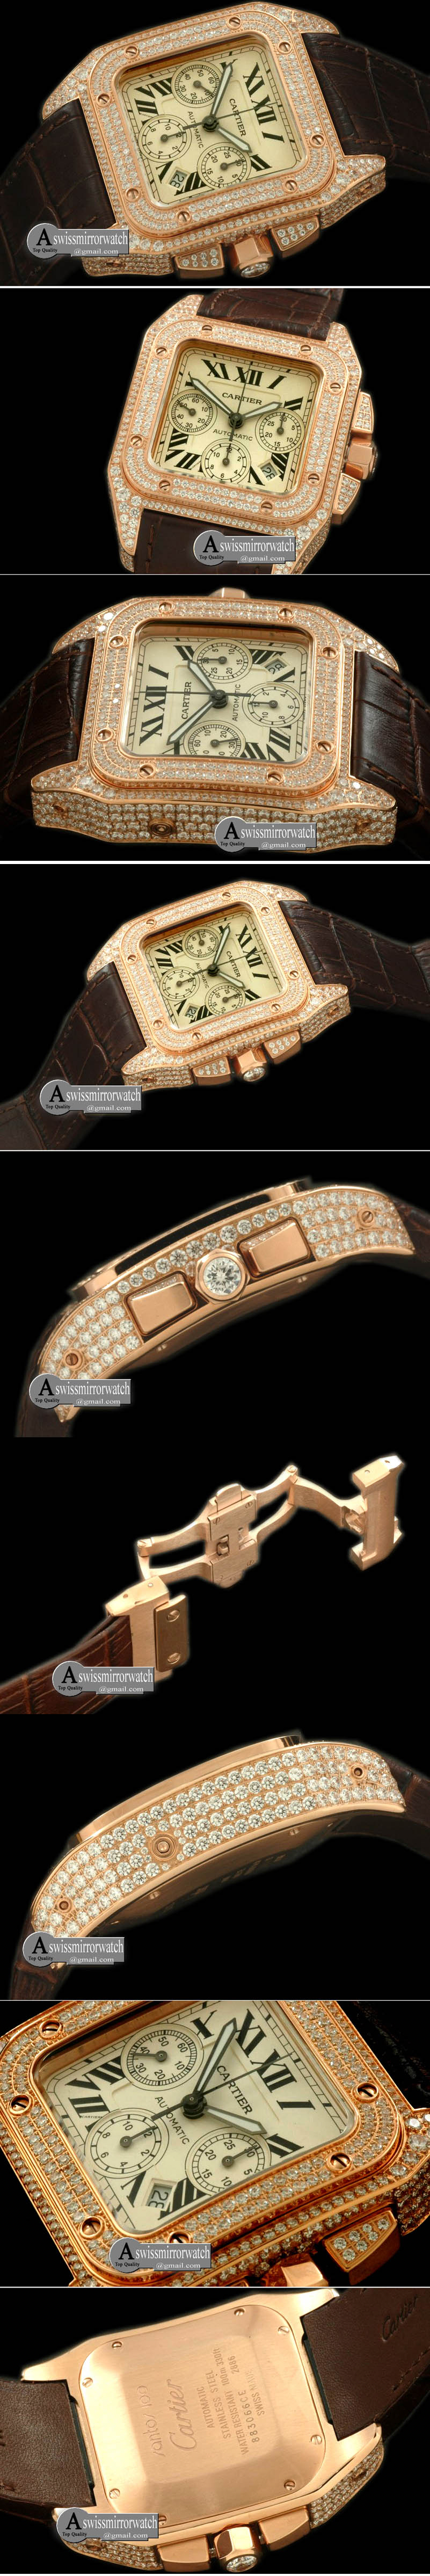 Replica Cartier Special Edition Watches